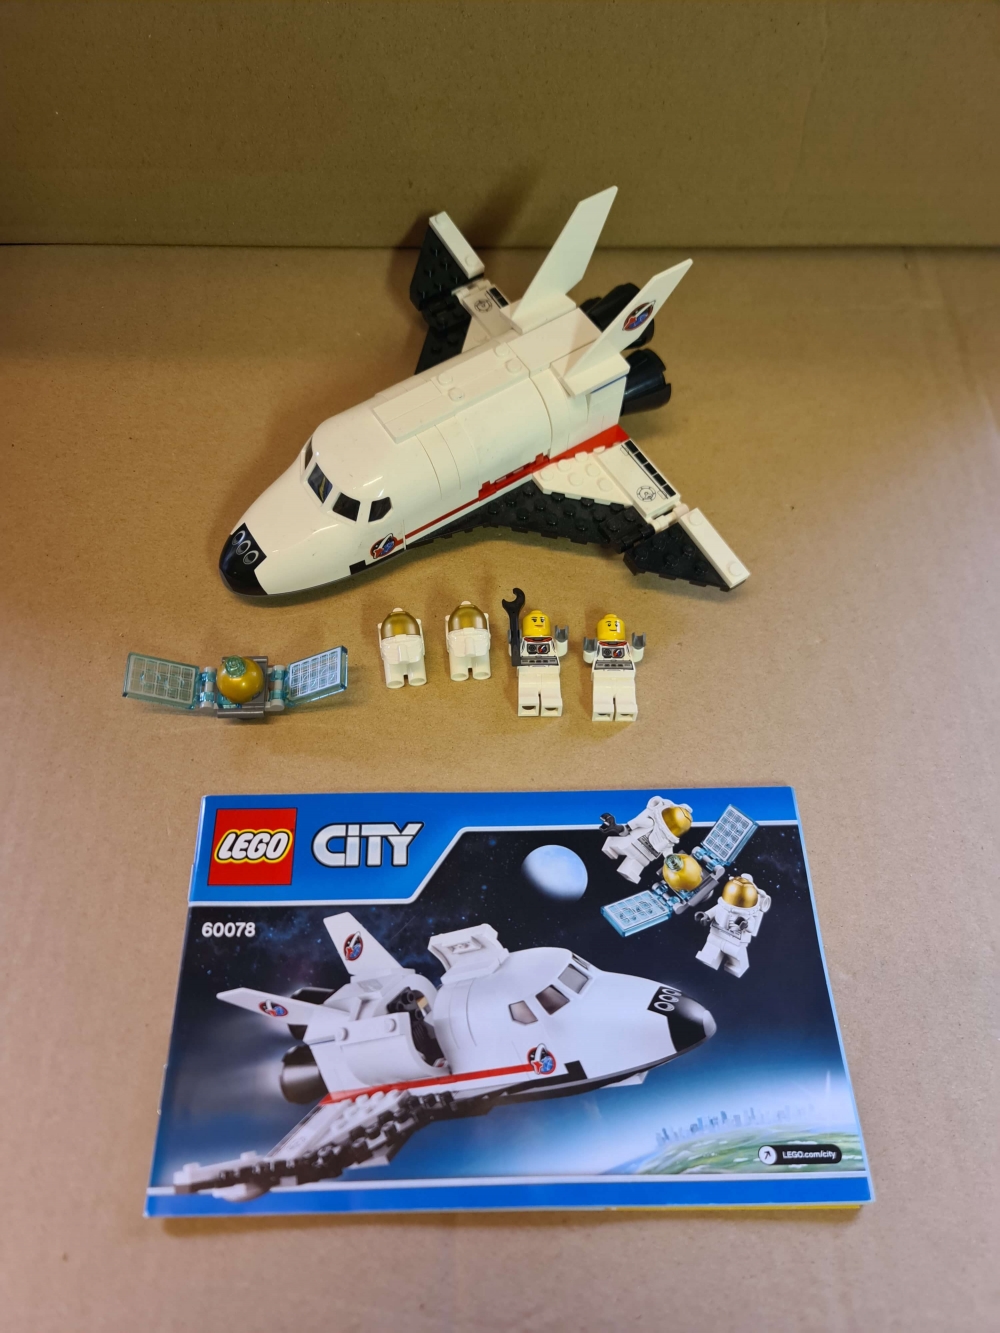 Sett 60078 fra Lego City serien.

Meget pent. Komplett med manual.
